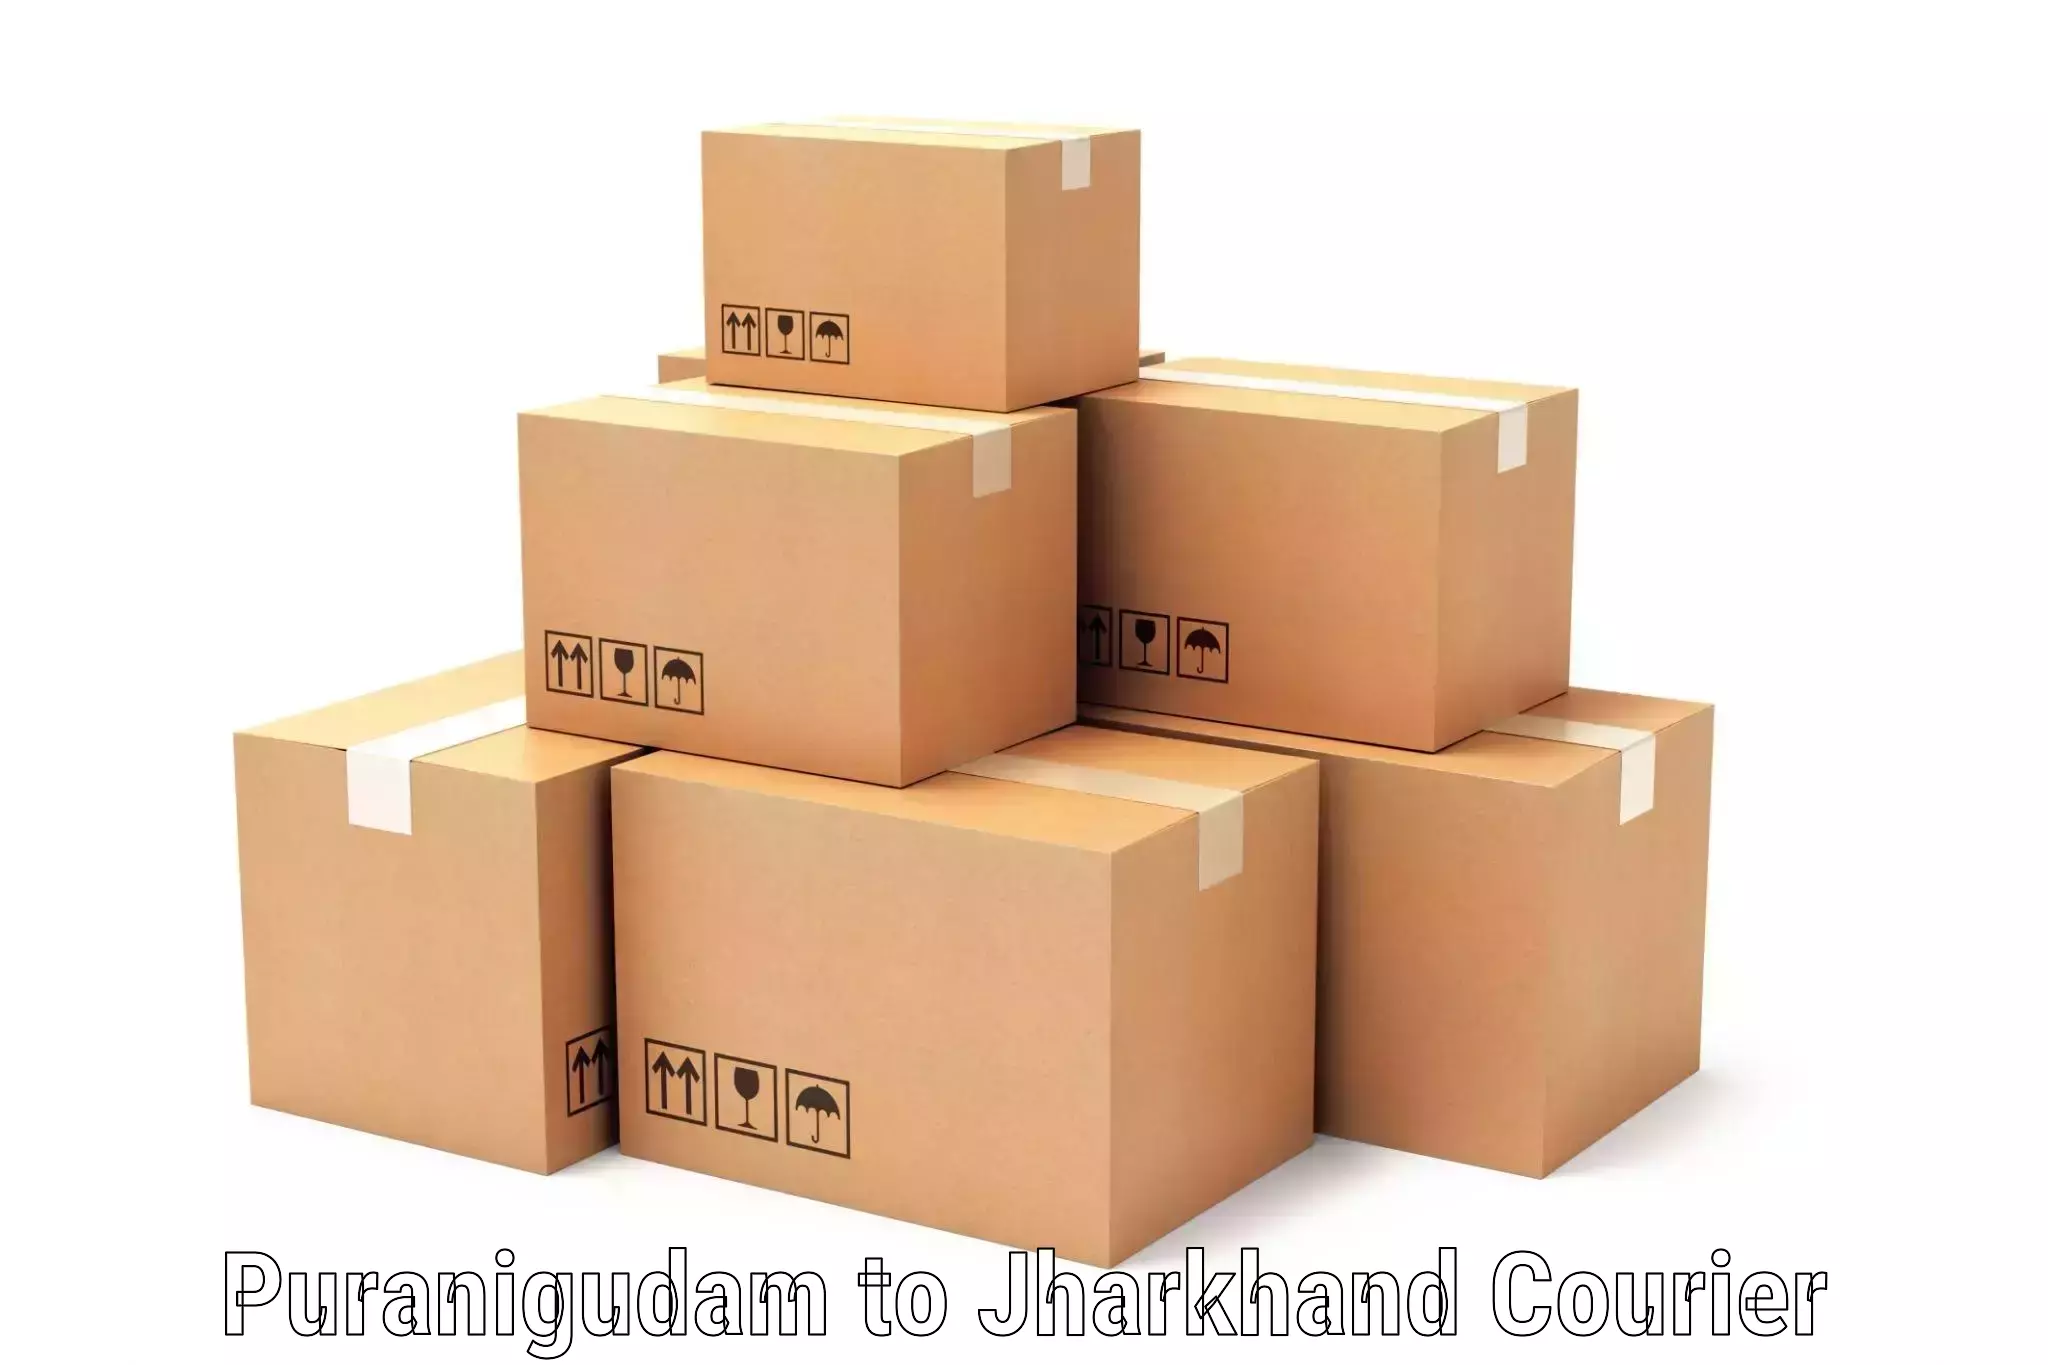 Express delivery capabilities Puranigudam to IIIT Ranchi